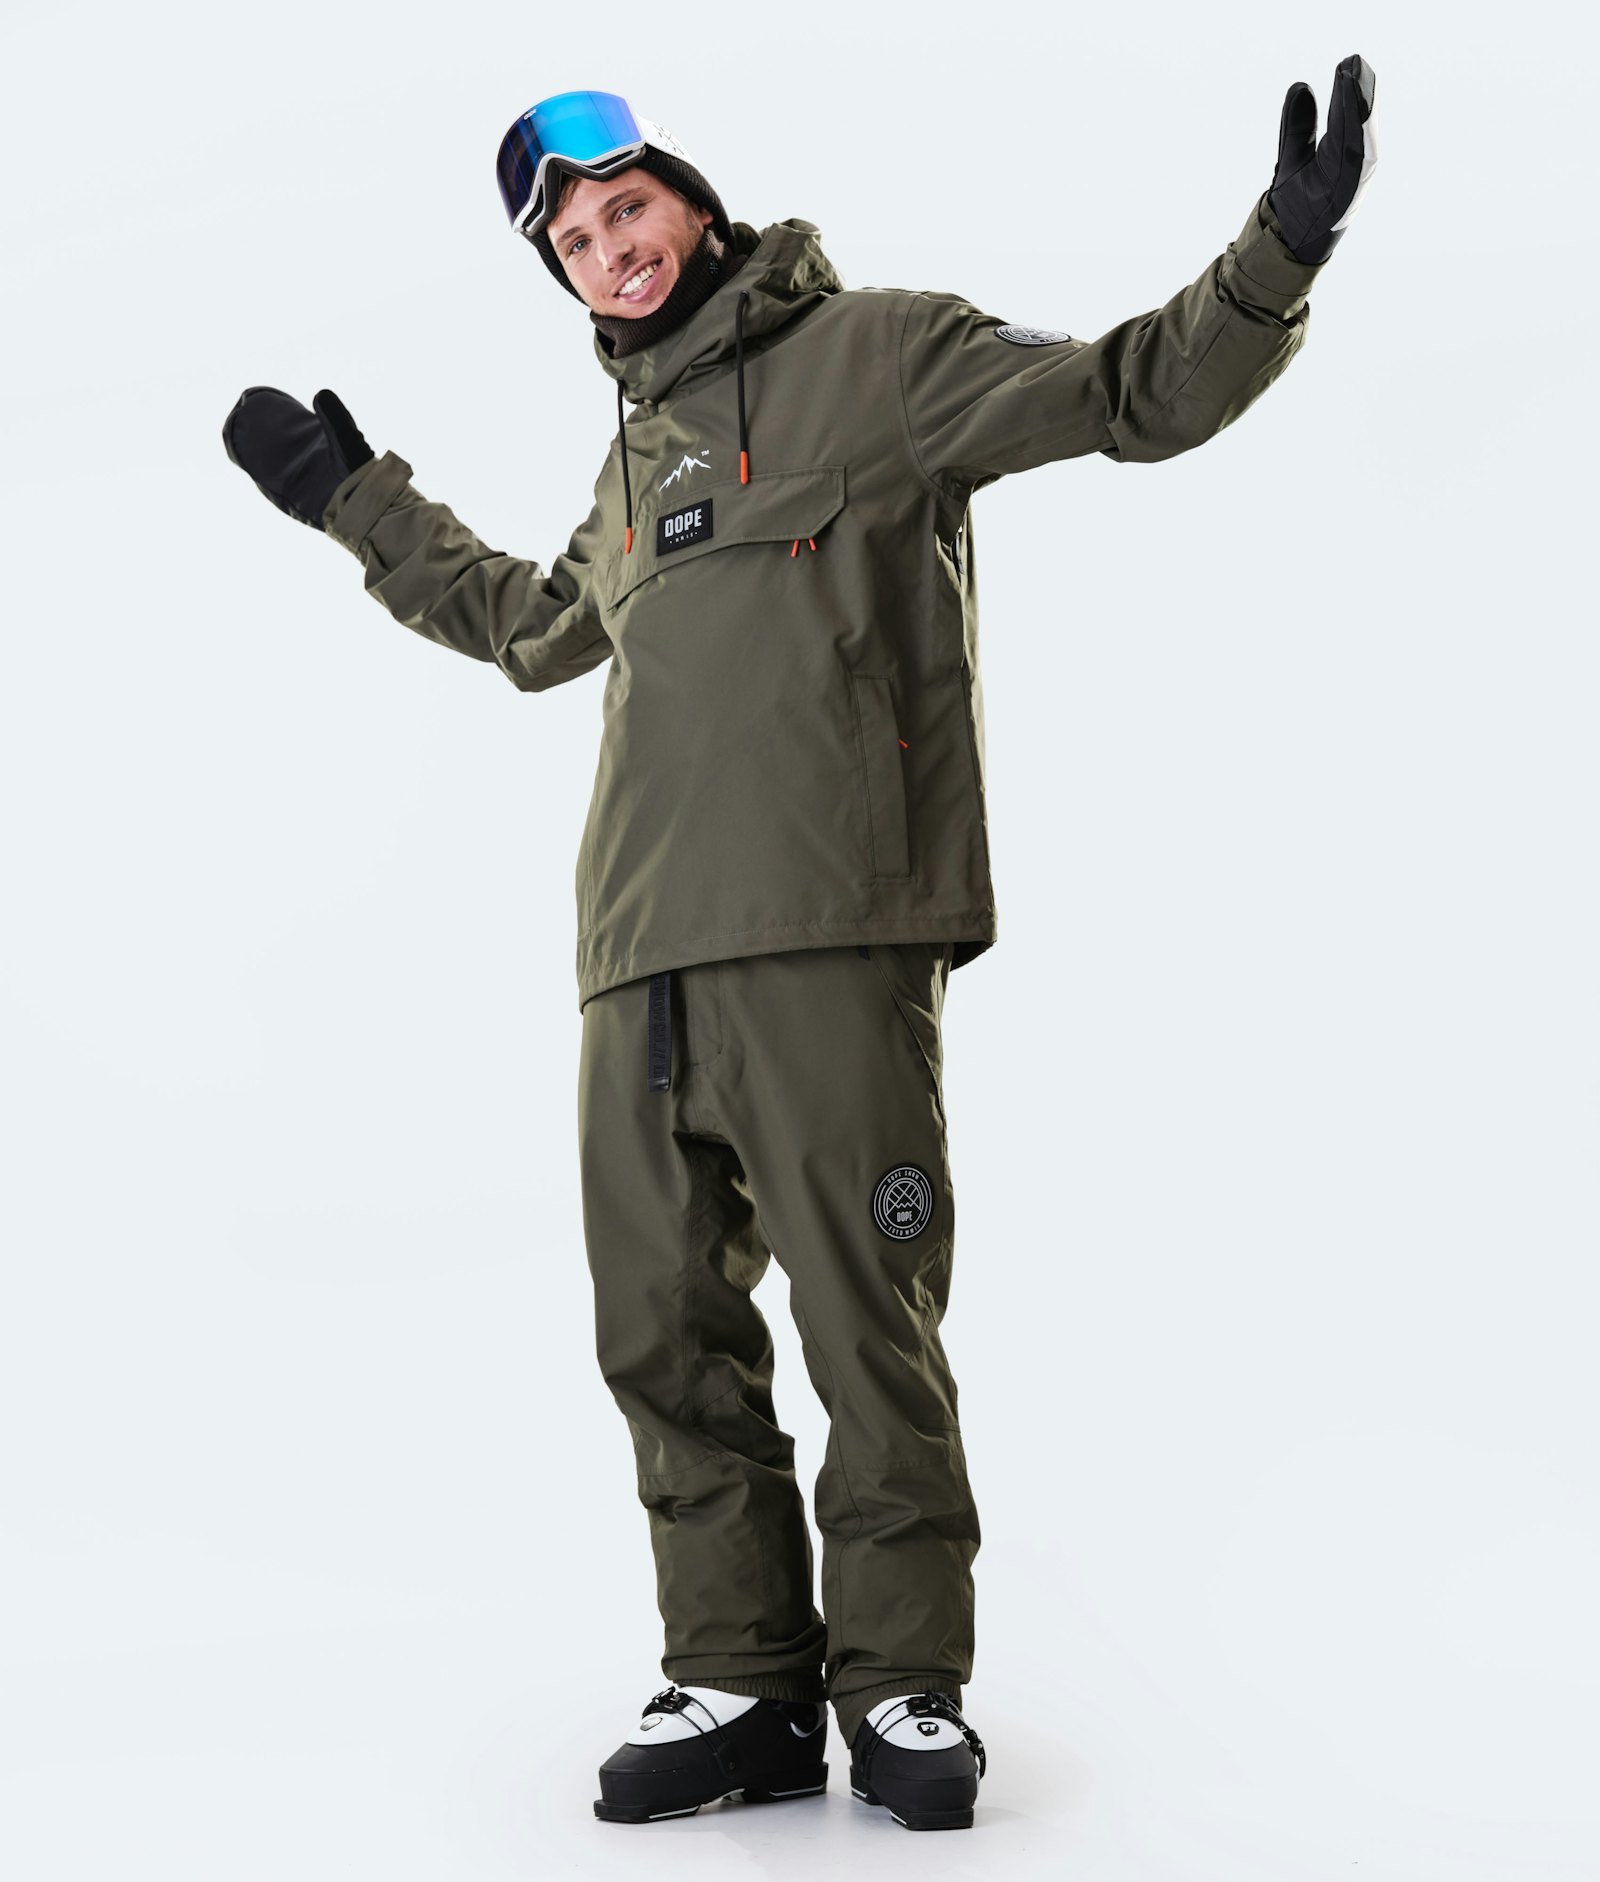 Blizzard 2020 Ski Jacket Men Olive Green